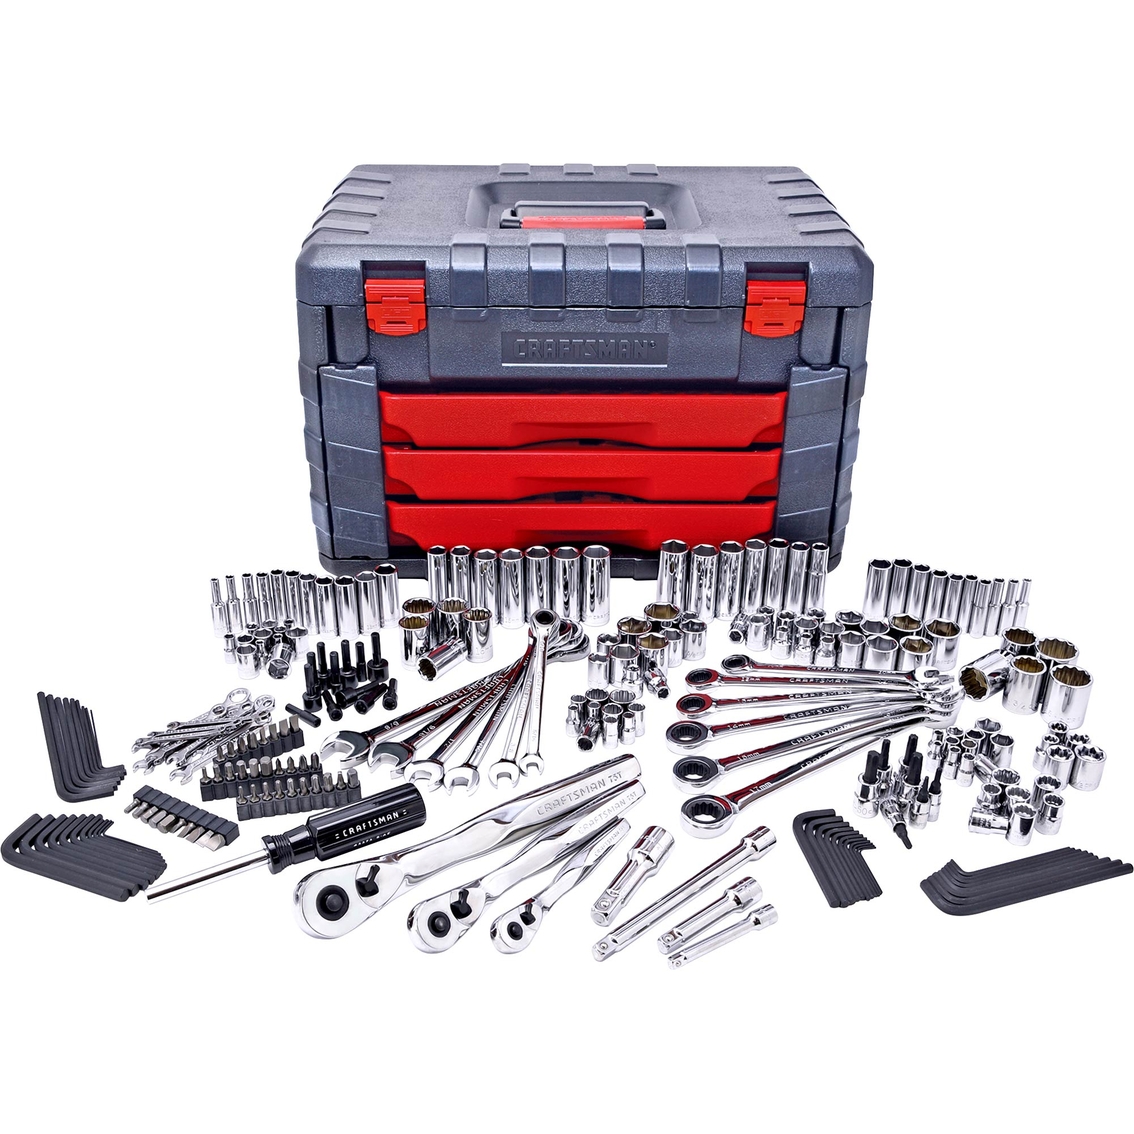 Craftsman 165 Pieces Mechanics Tool Set 36165 for sale online 